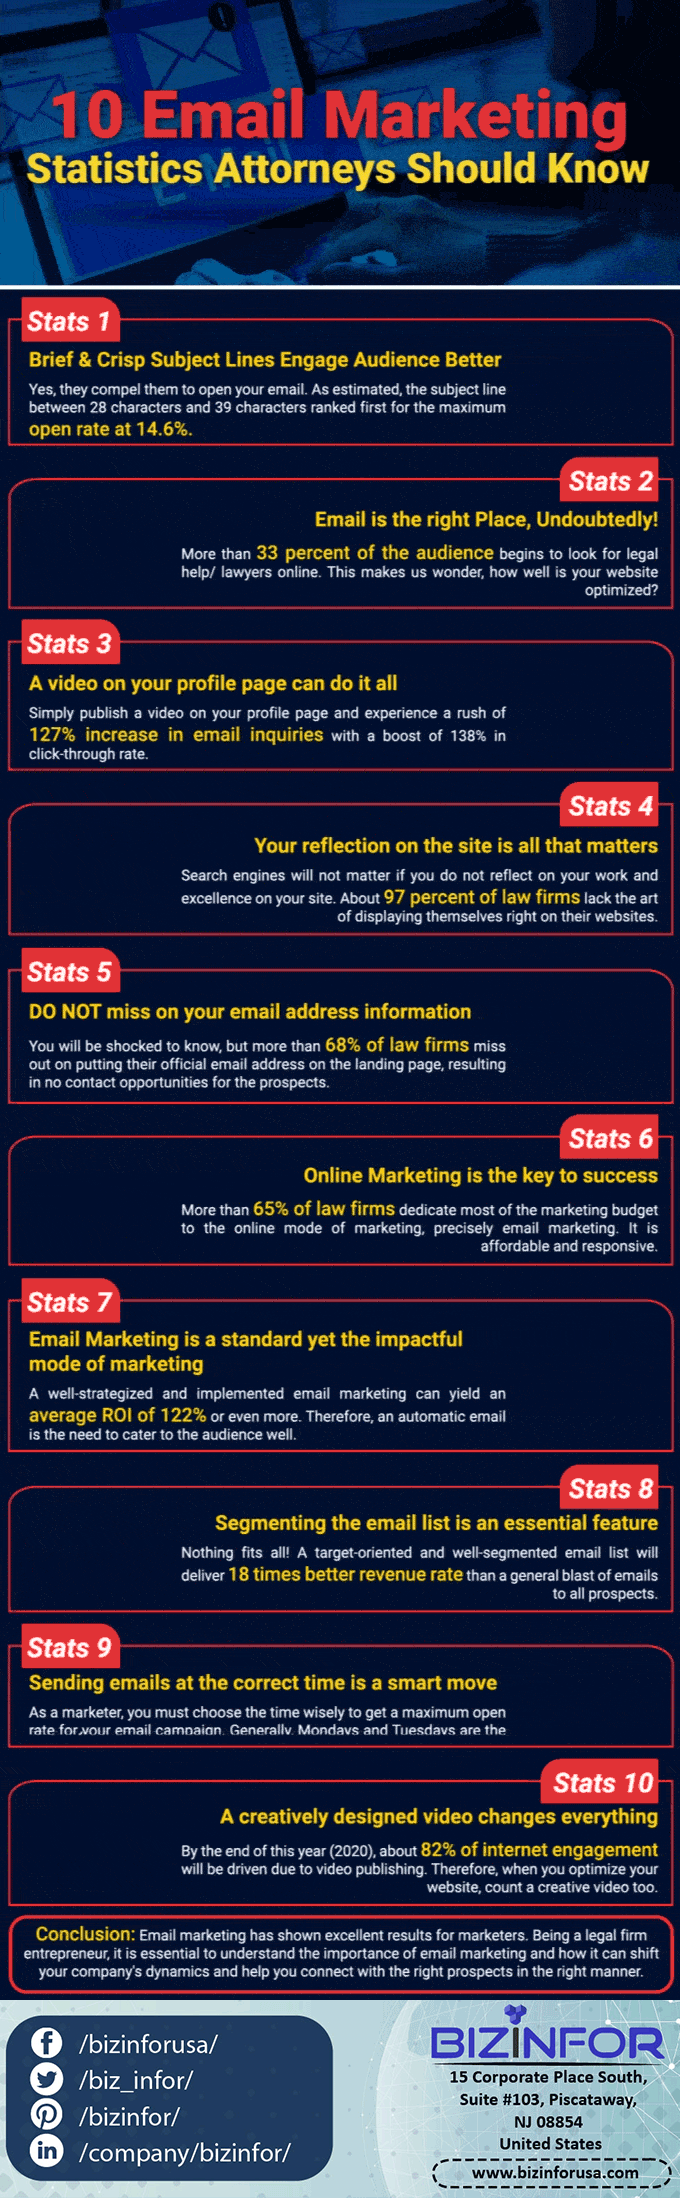 Email-Marketing-Statistics